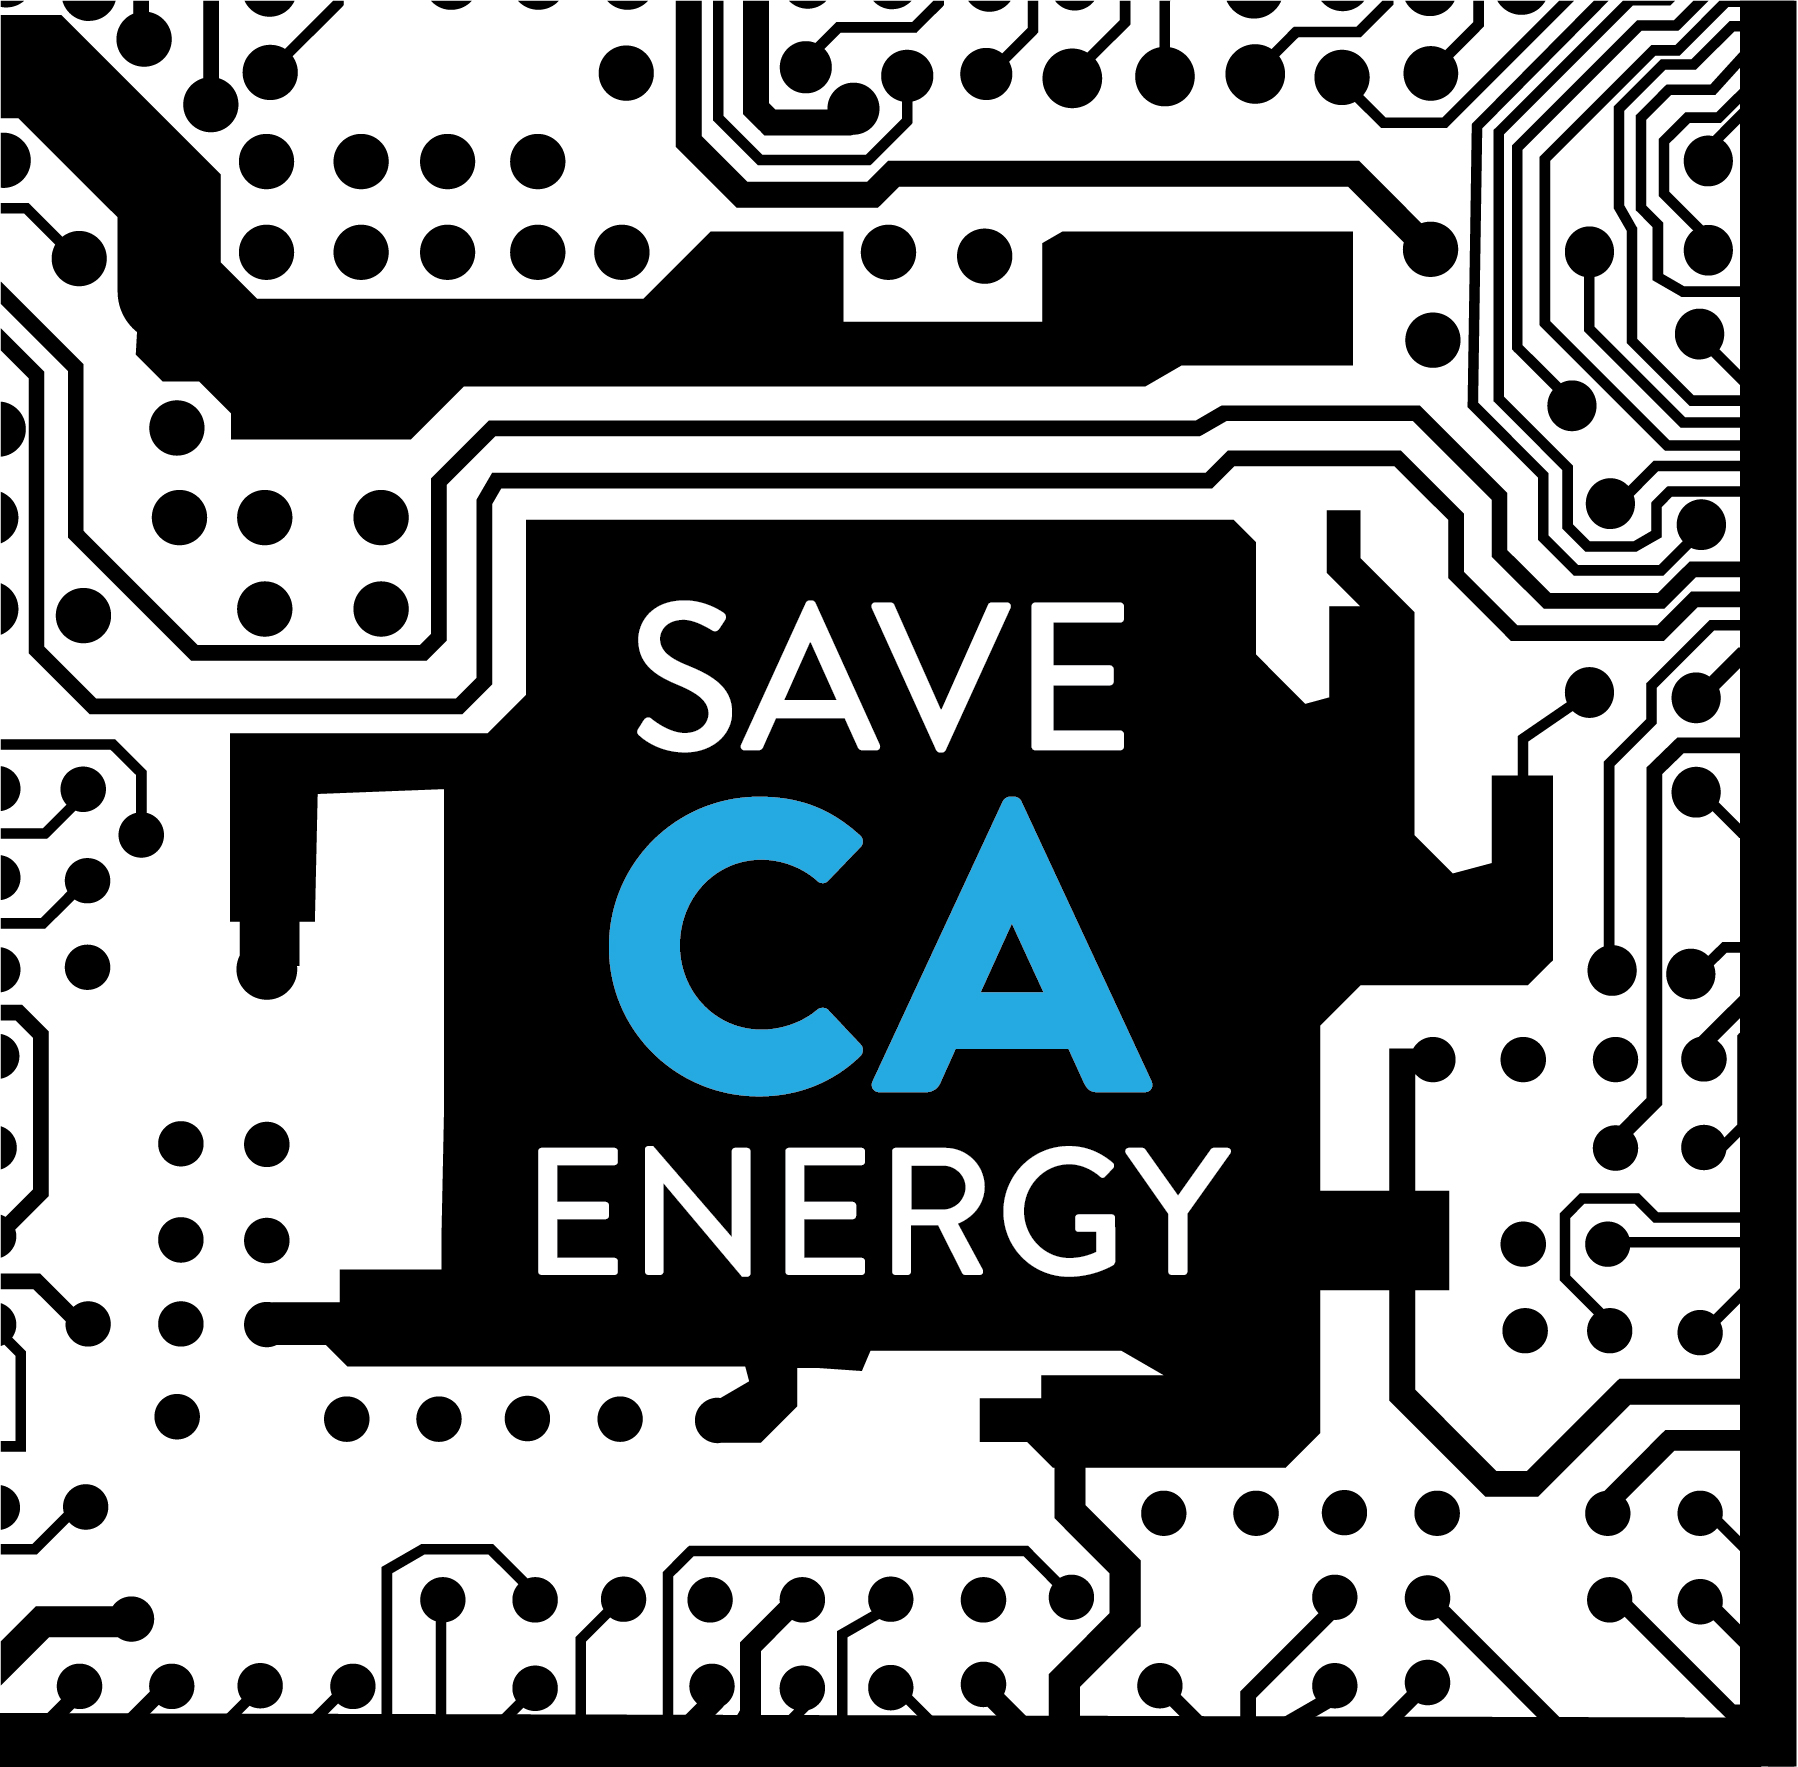 SaveCAEnergy-7_Brand Mark BIG.jpg